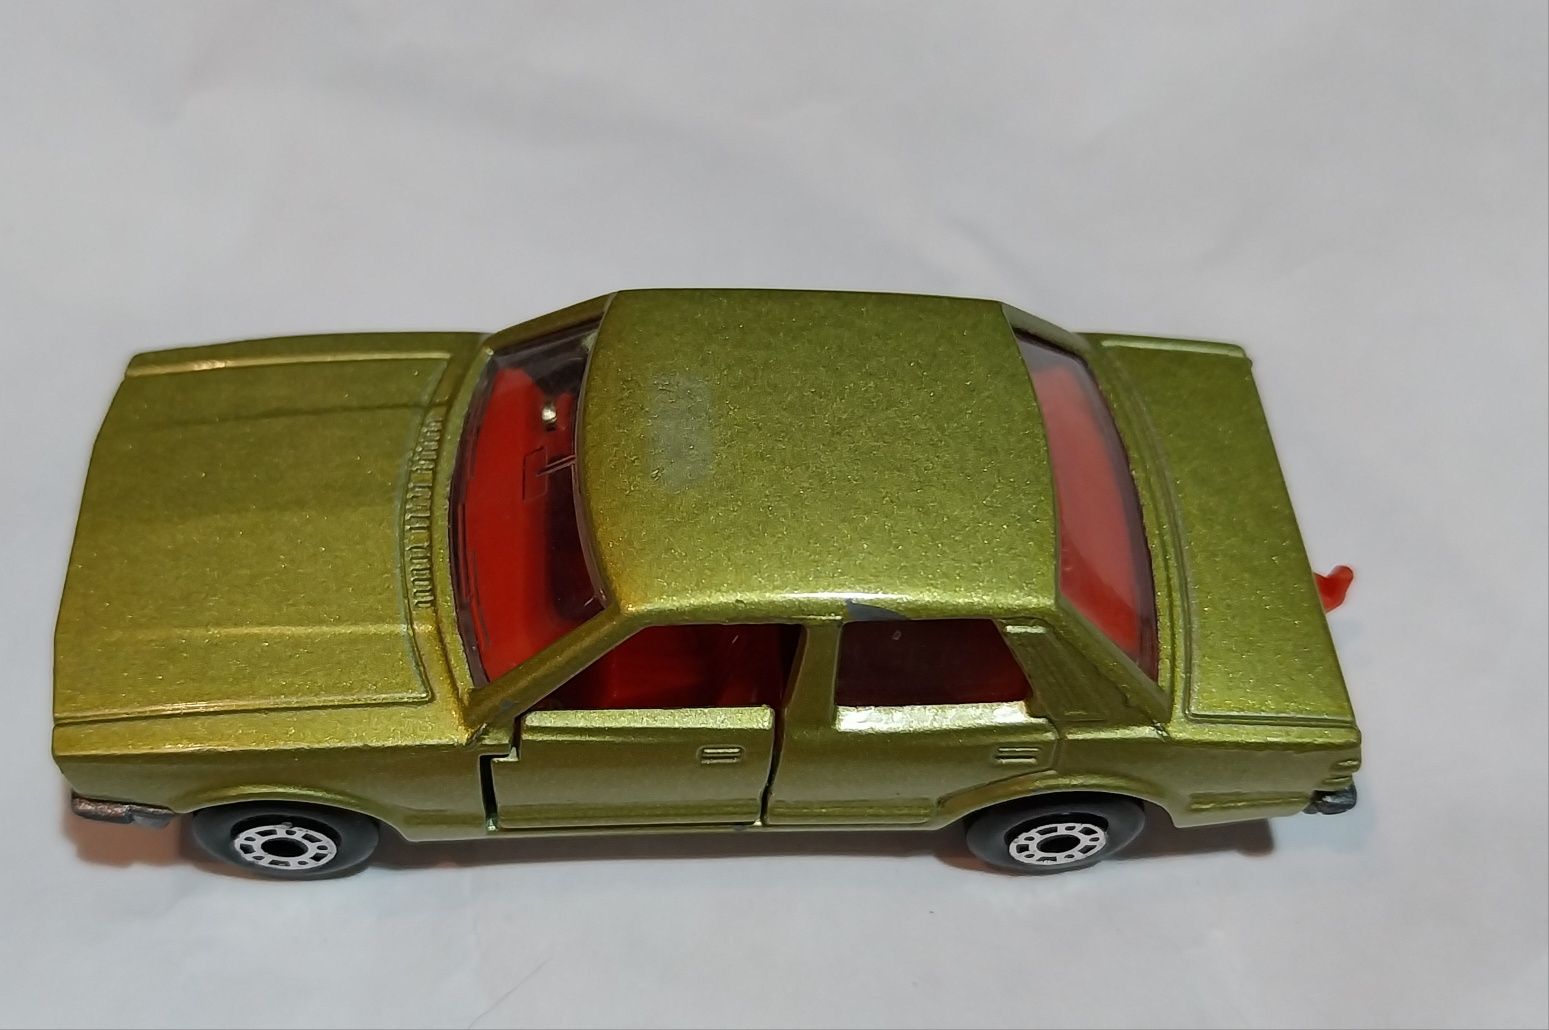 Miniatura antiga Matchbox Ford Cortina